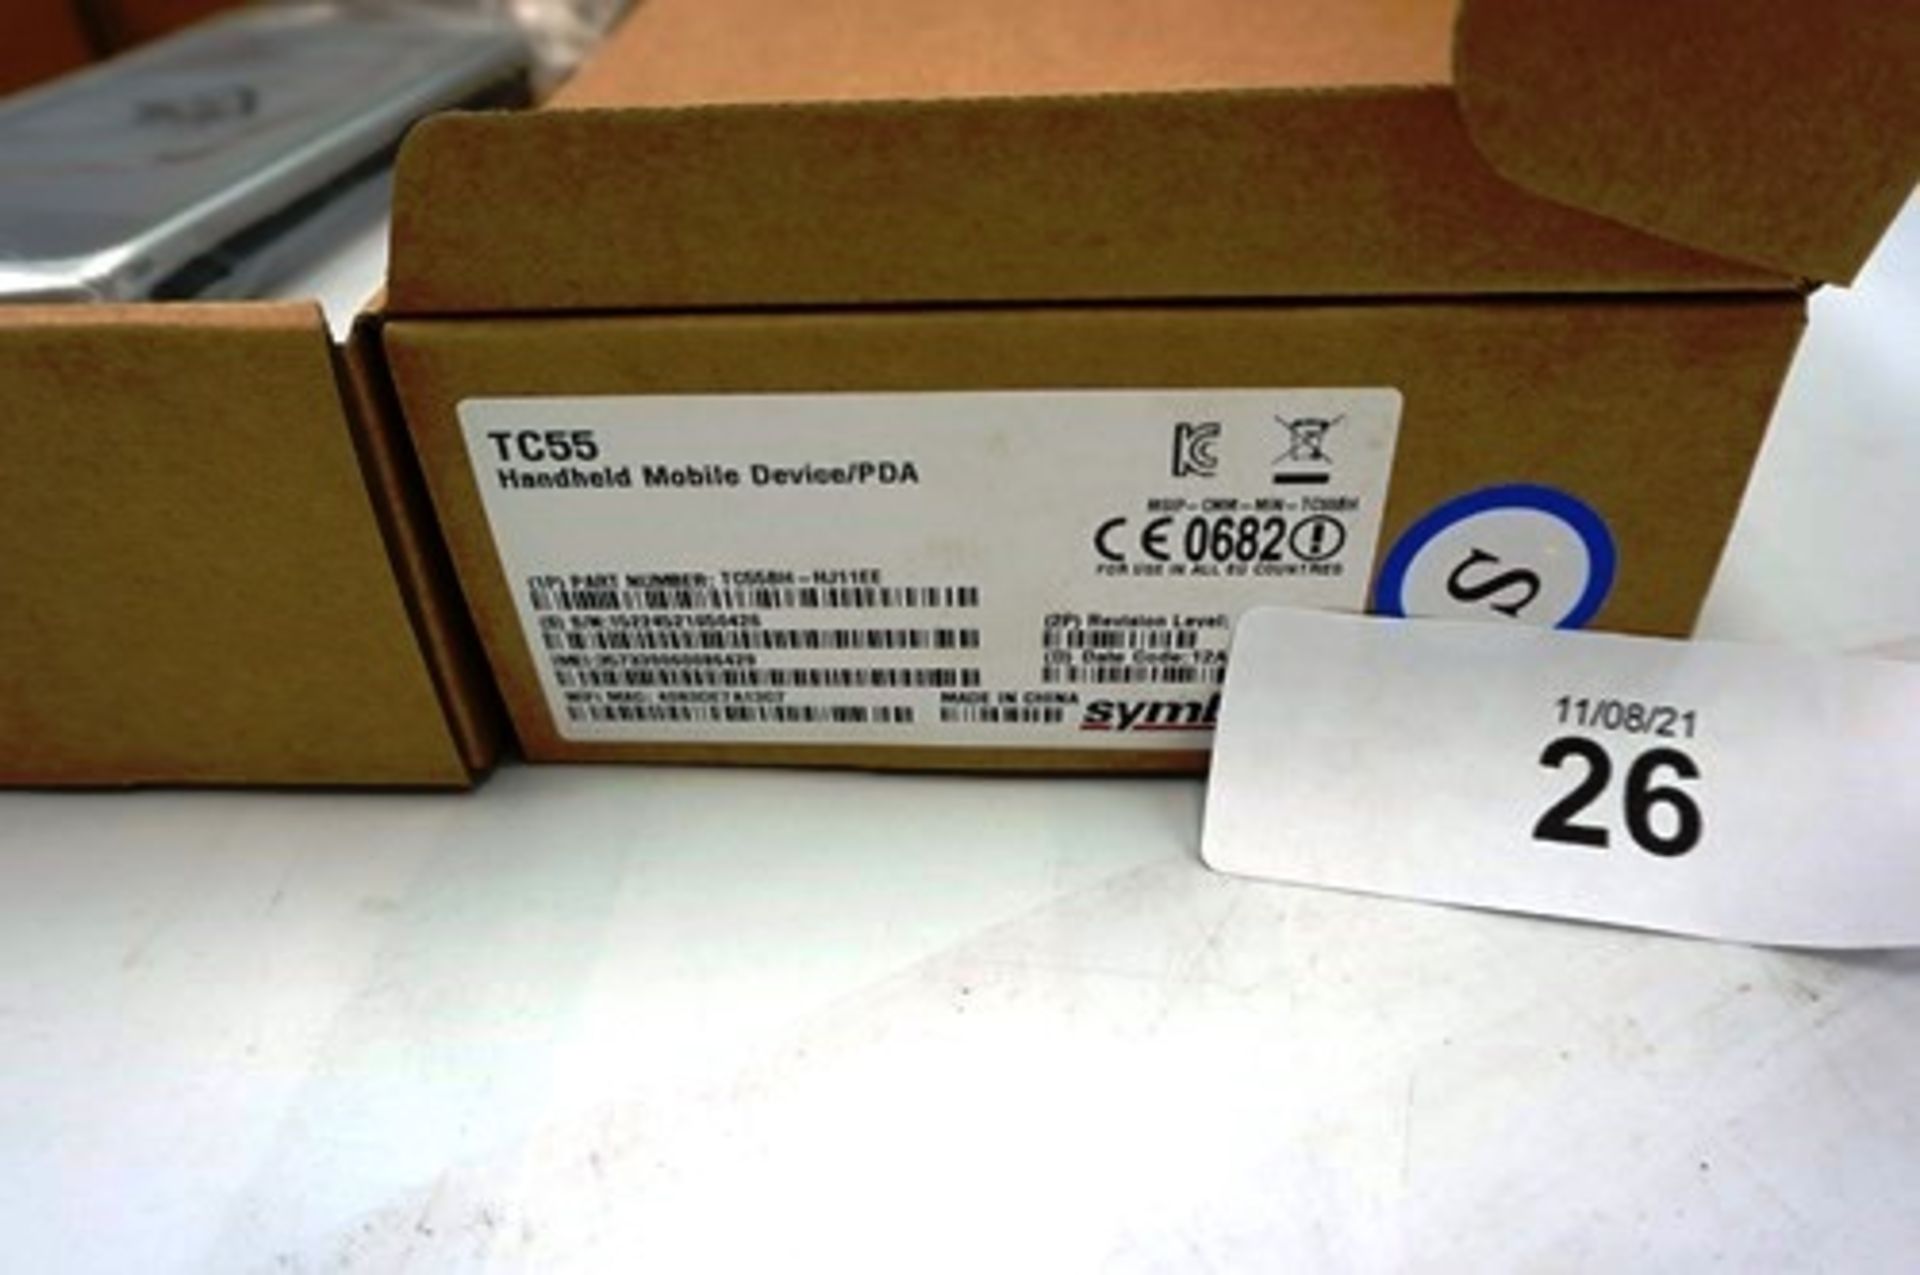 2 x Symbol TC55 handheld mobile retail PDA's, model TC55BH - Sealed new in box (C1)